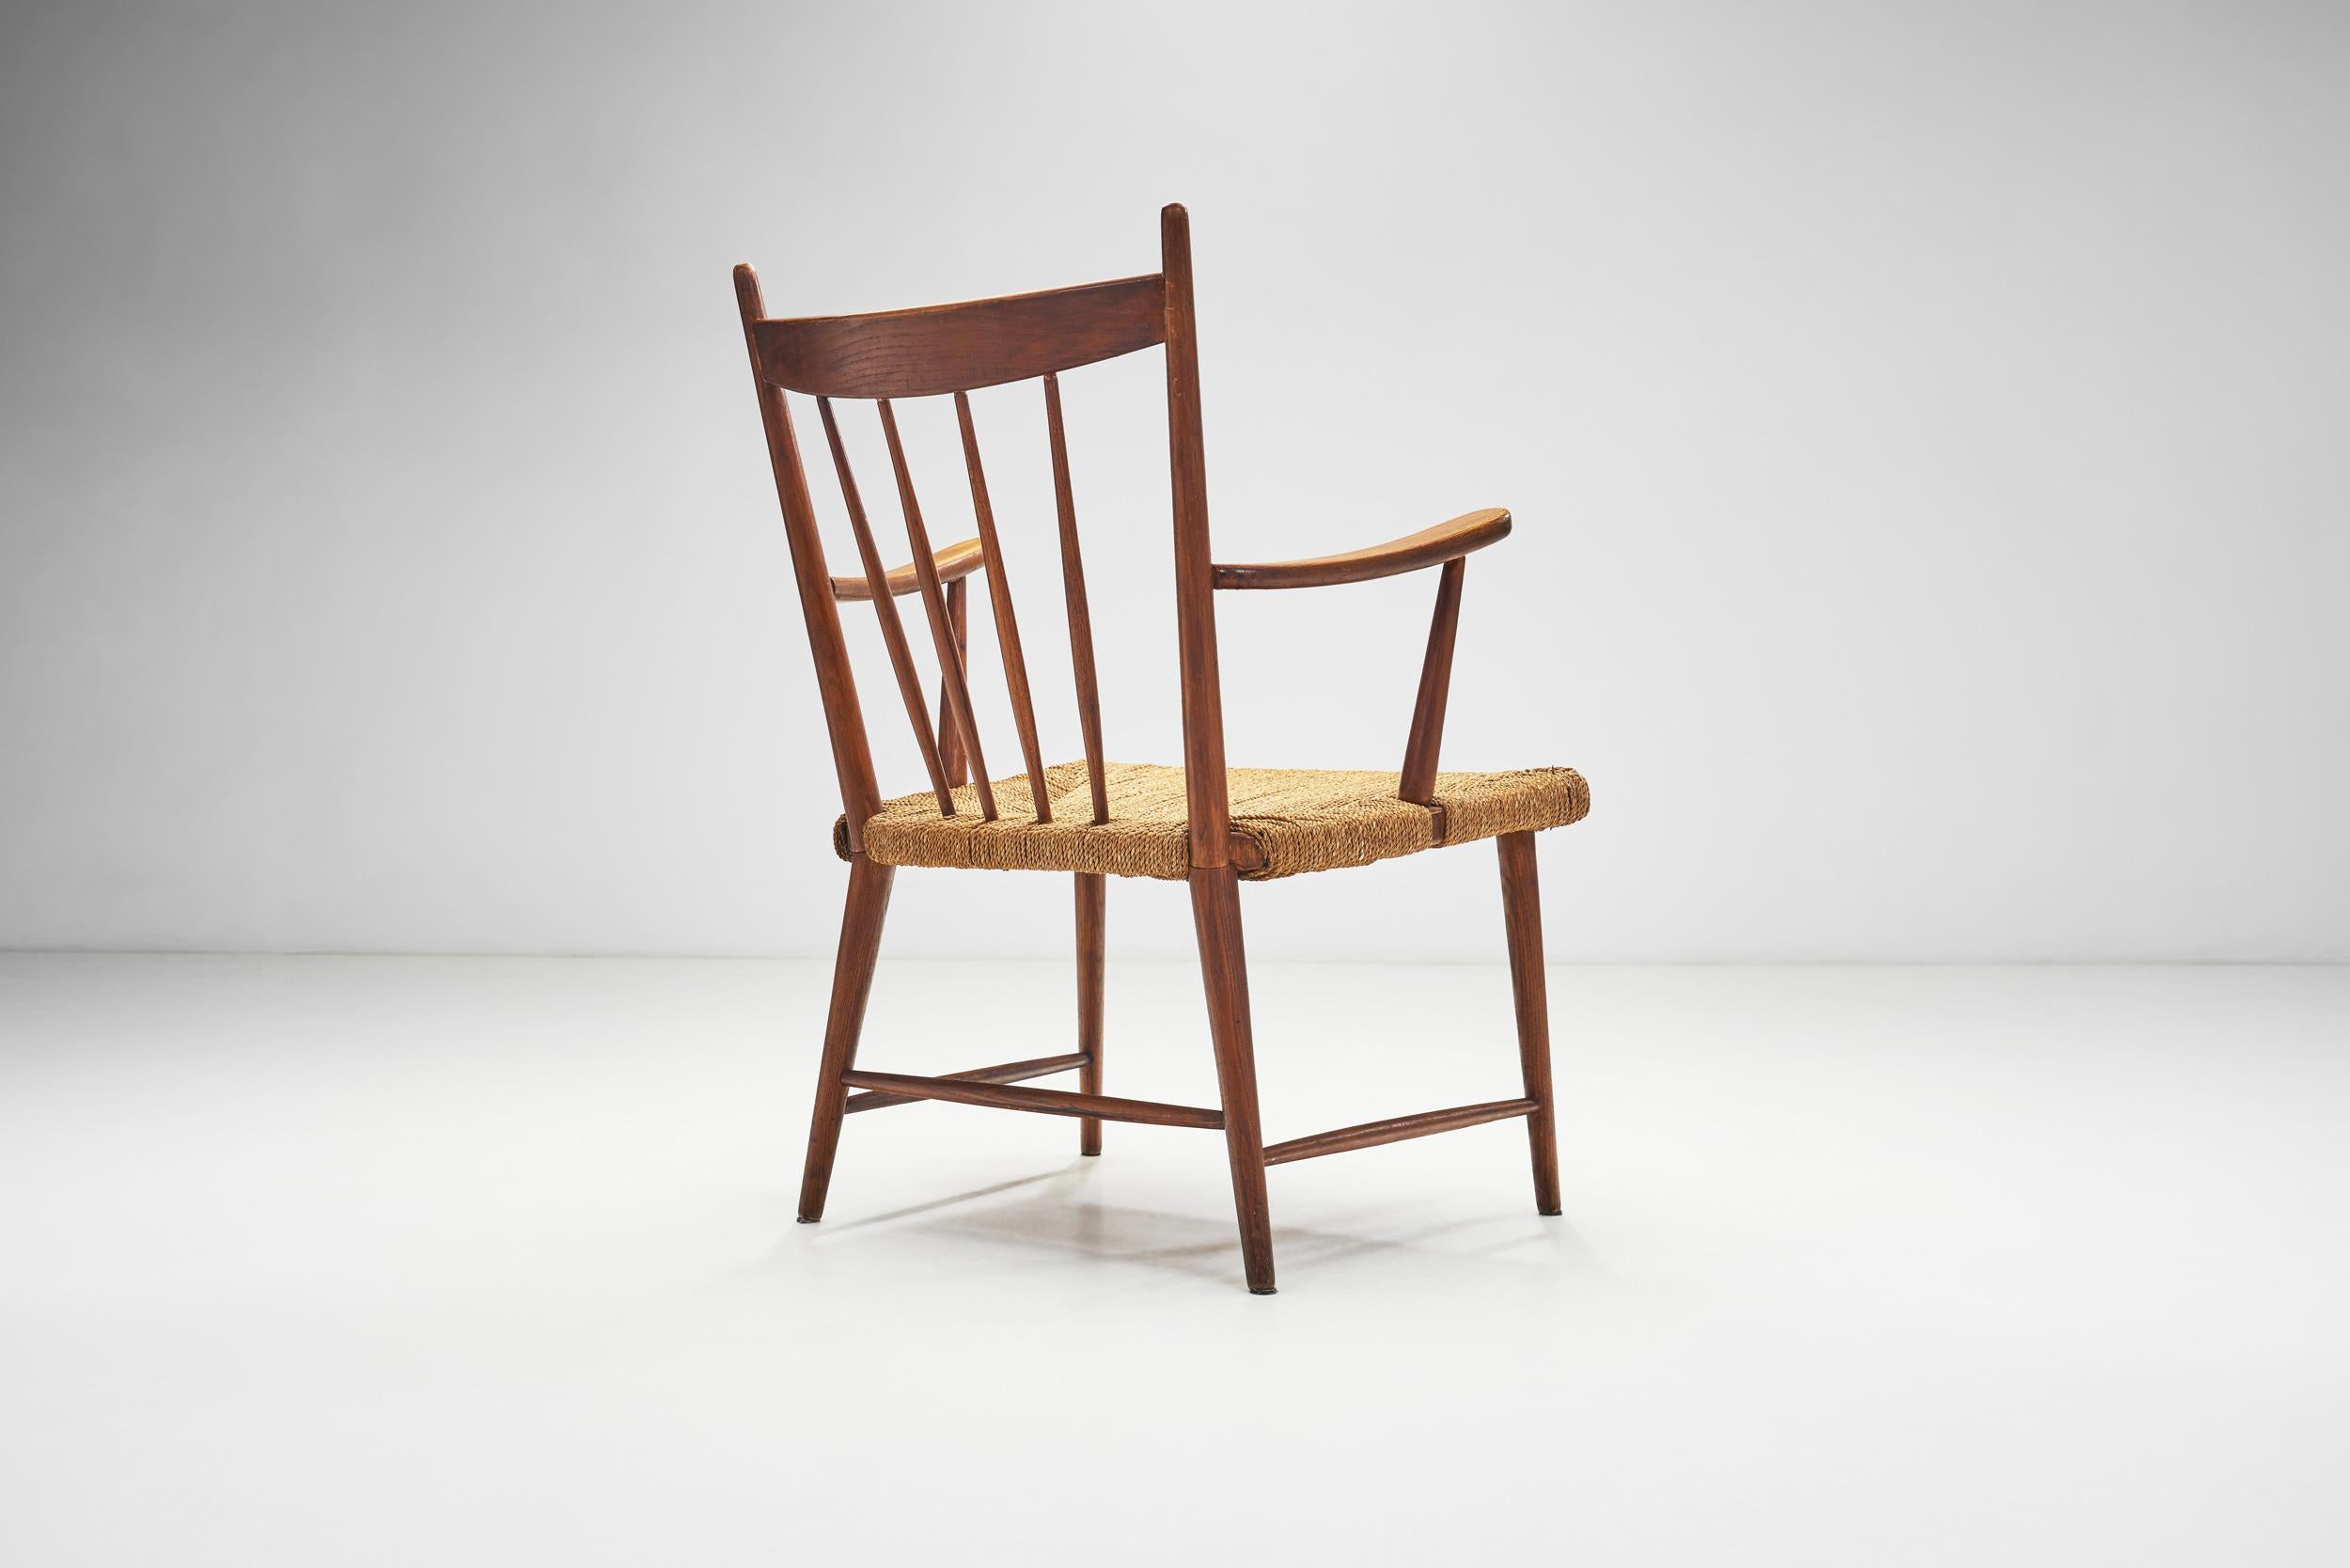 Teak Slatback Chairs with Woven Danish Cord Seats, Denmark ca 1960s For Sale 1